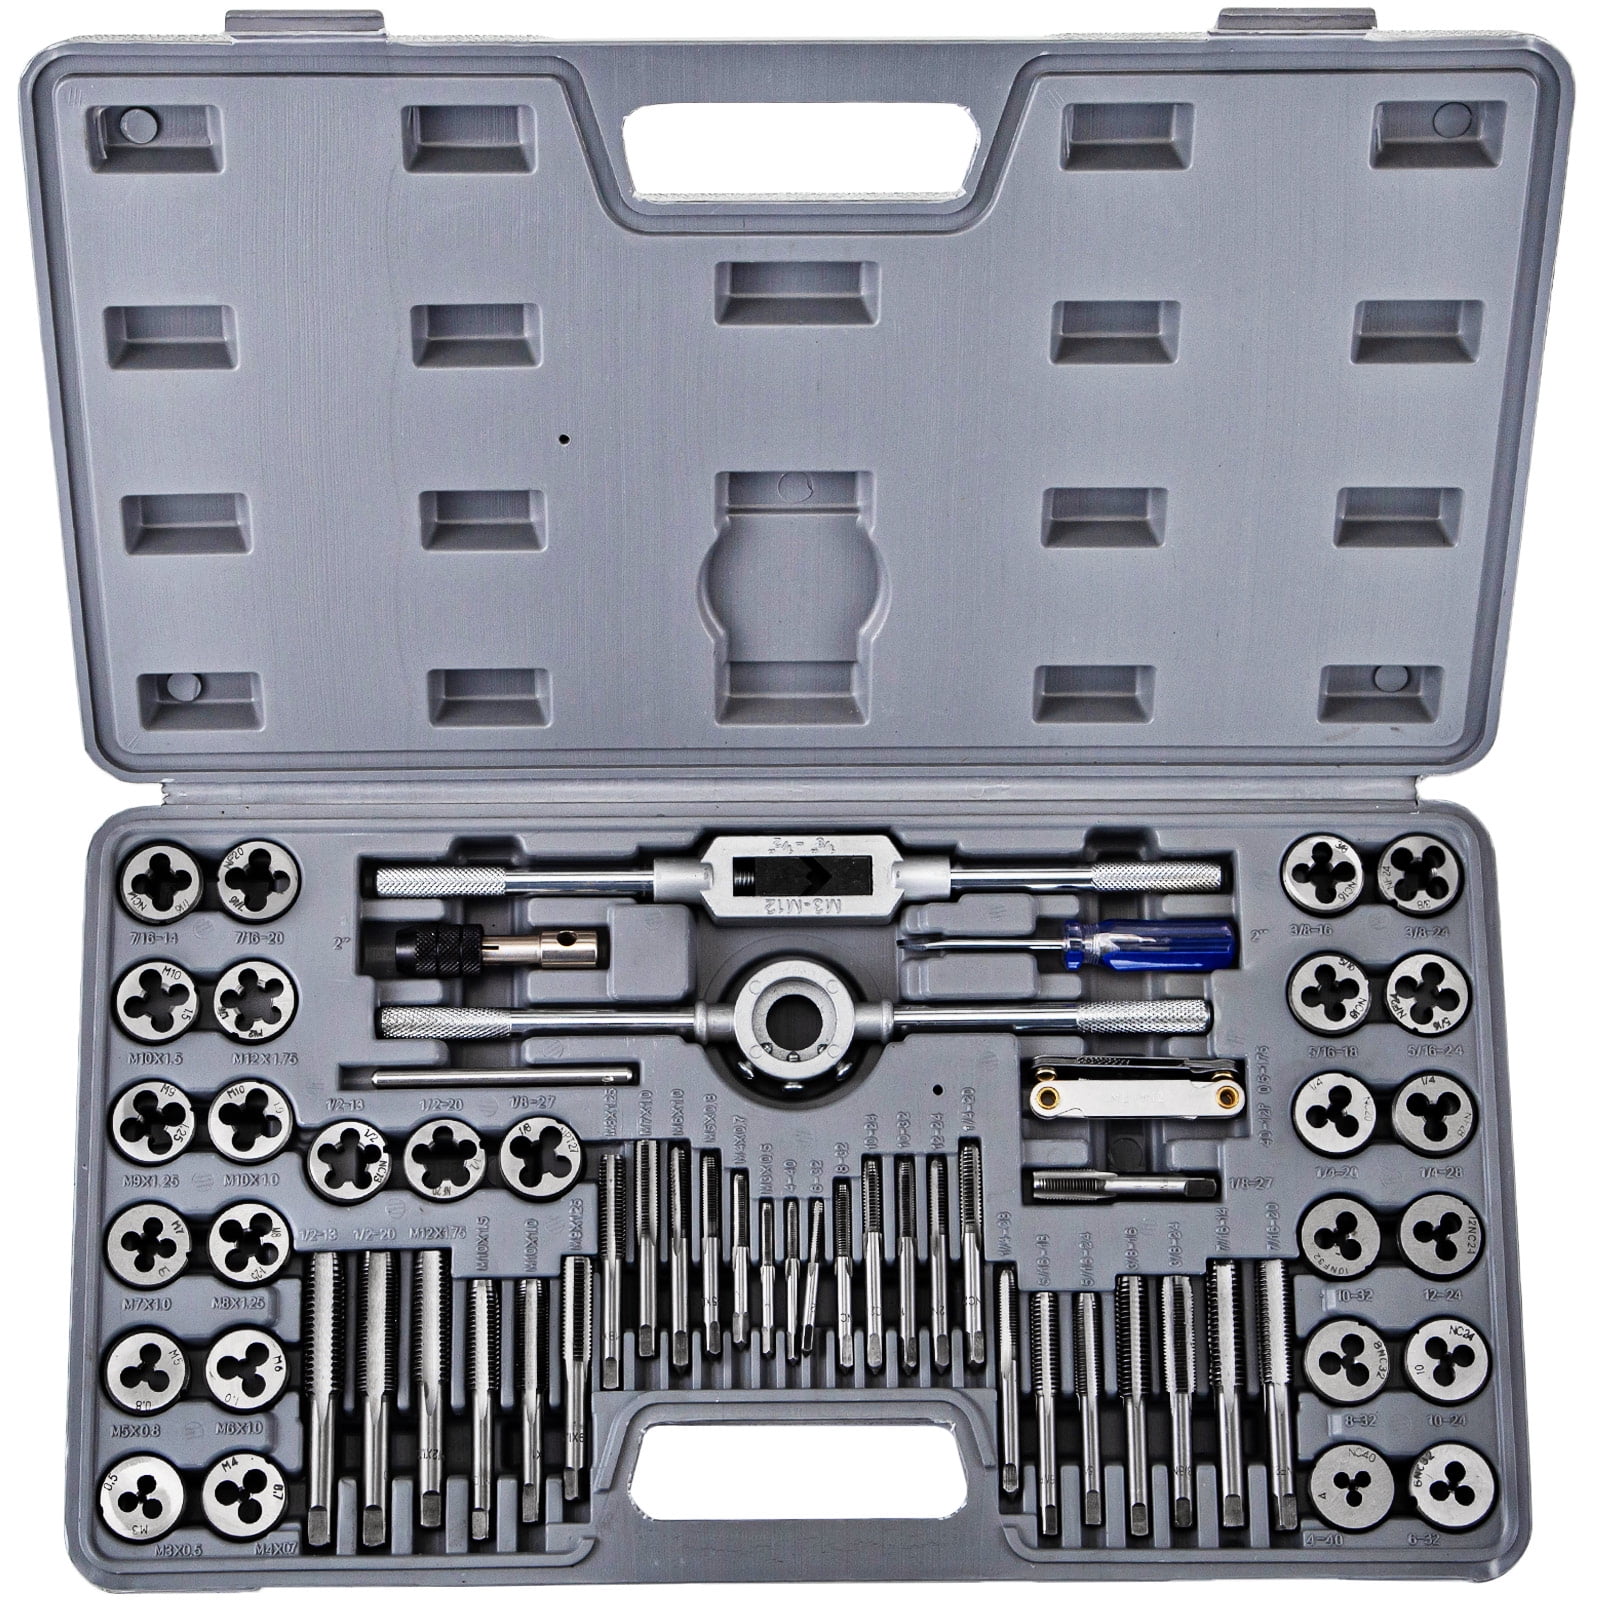 Segomo Tools 60 Piece Metric & SAE Threading Tap & Die Tool Set with Storage Case TD60MMSAE